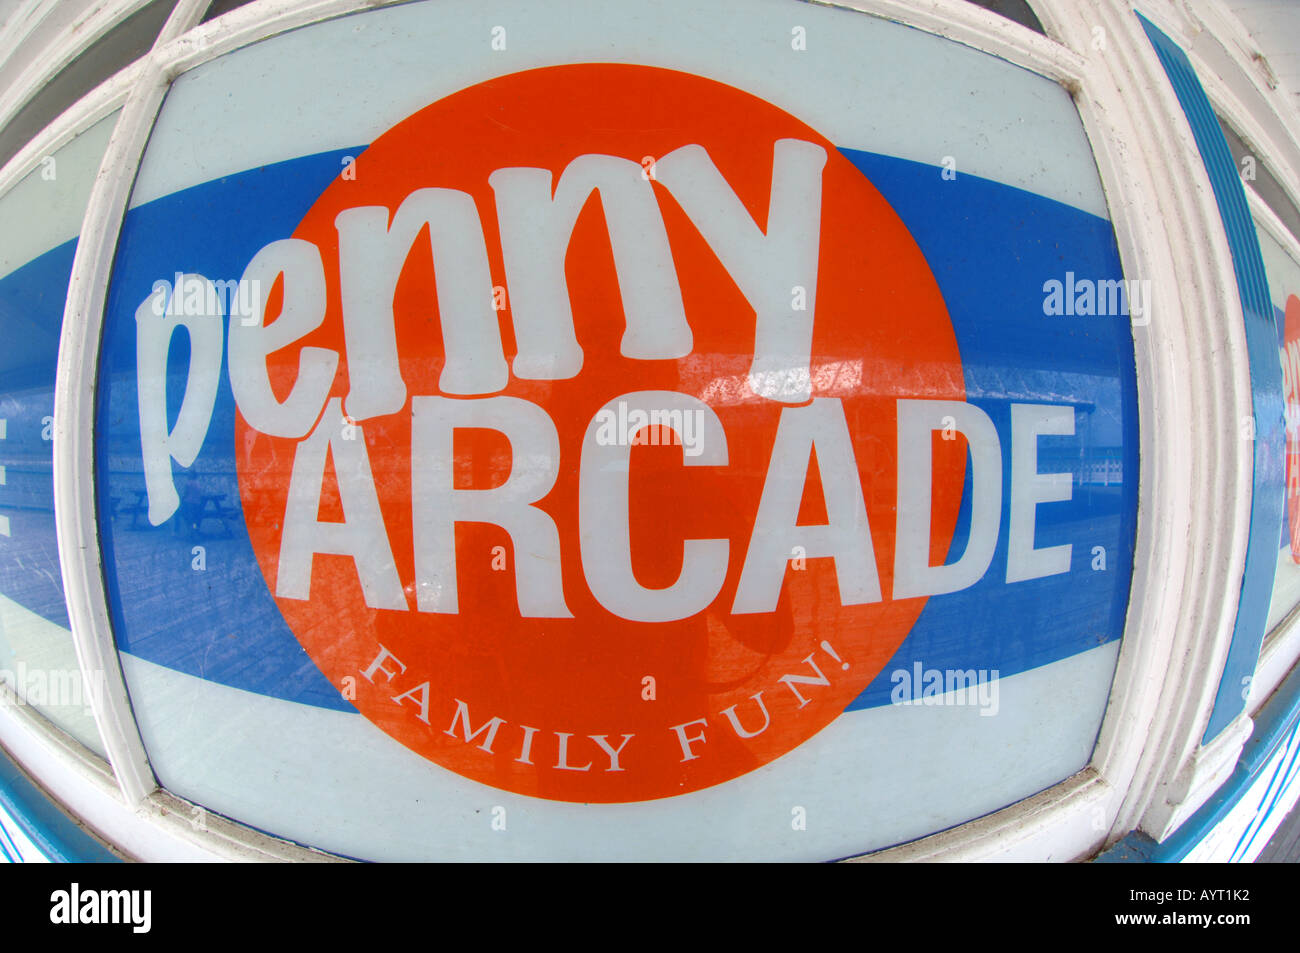 Penny Arcade sign, UK Stock Photo